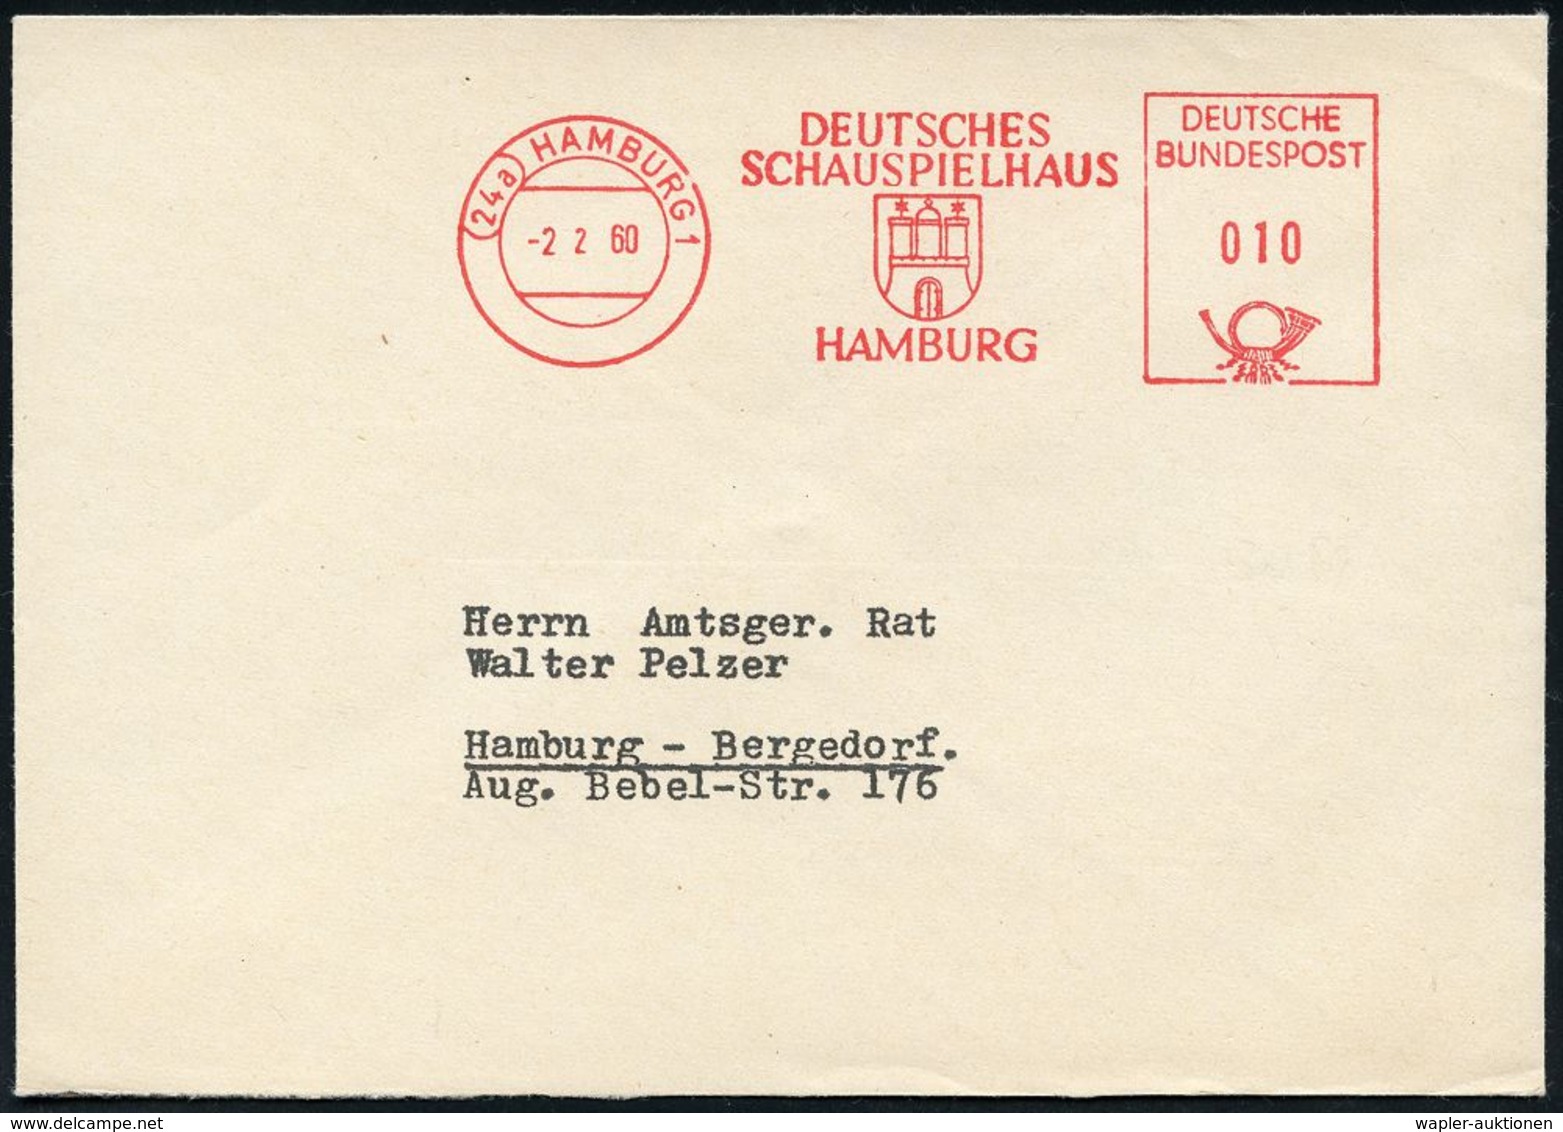 BÜHNE / THEATER / THEATER-FESTIVALS : (22a) HAMBURG 1/ DEUTSCHES/ SCHAUSPIELHAUS 1960 (2.2.) AFS (Stadtwappen) Rs. Abs.- - Théâtre